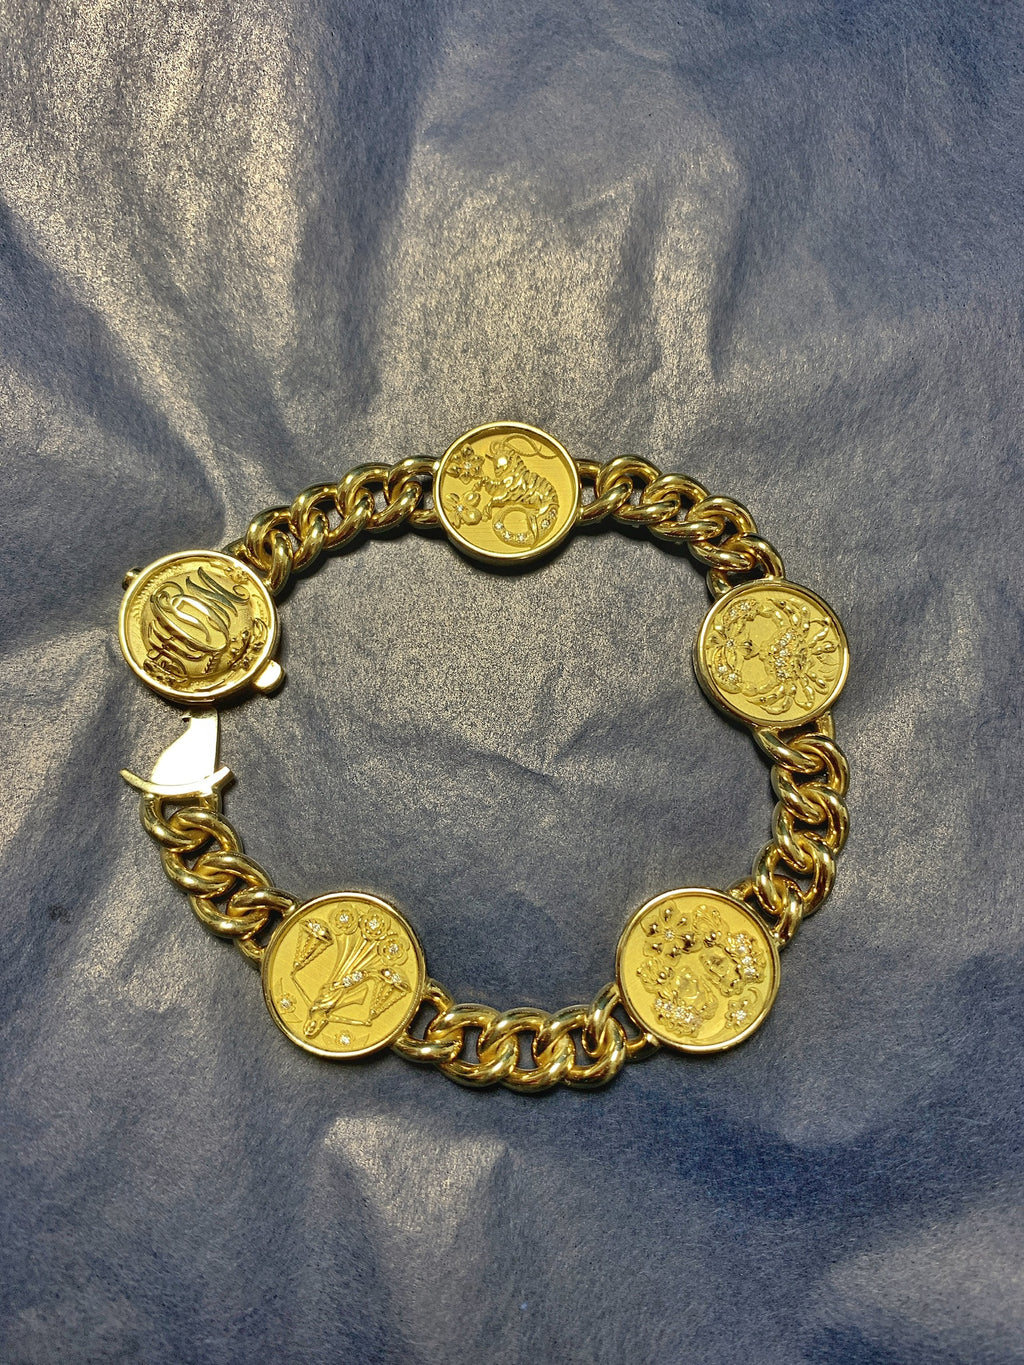 Talisman charm bracelet in yellow gold